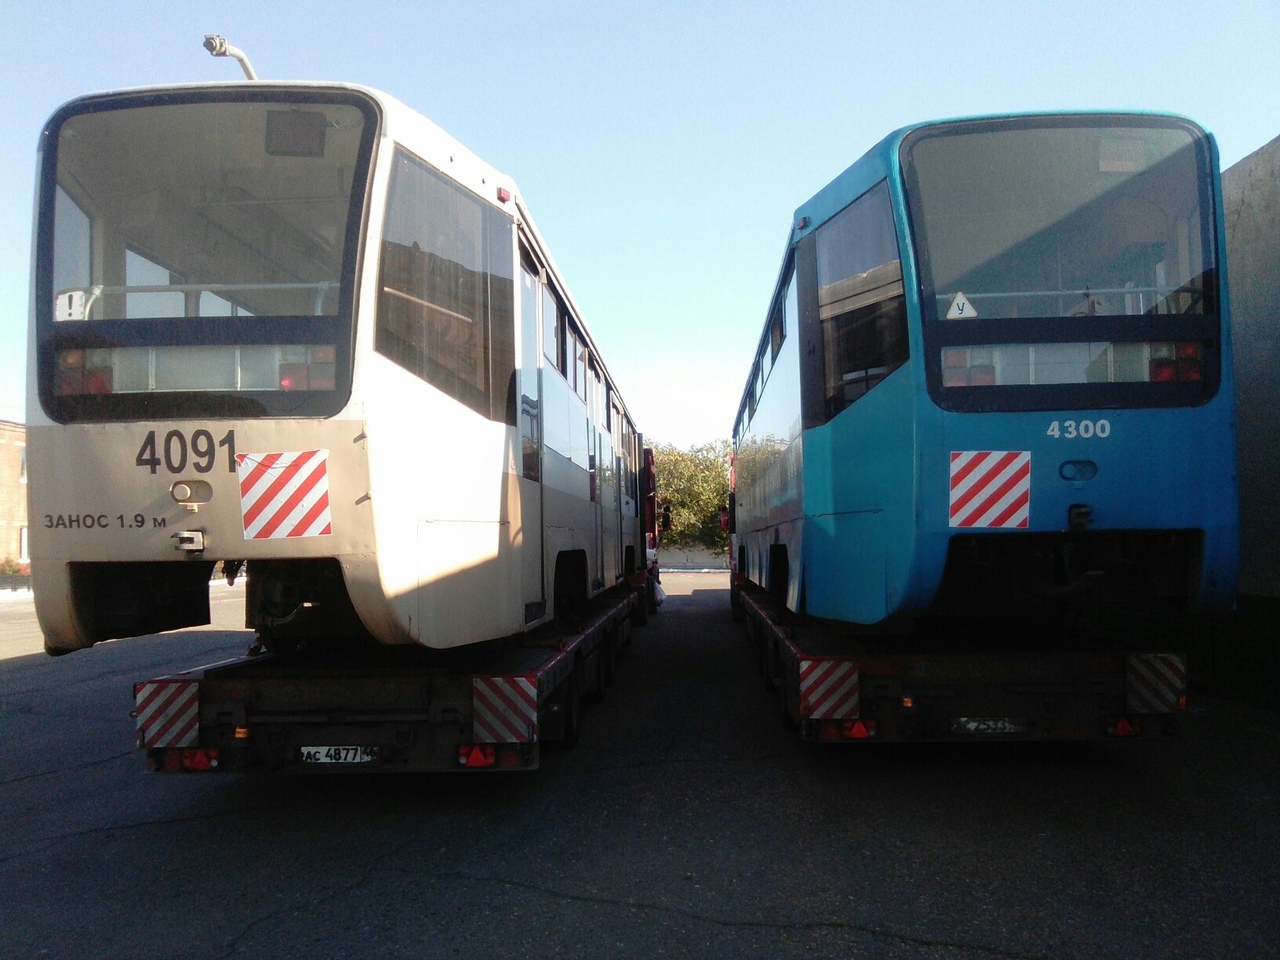 Omsk, 71-619A # 95; Omsk, 71-619AC # 94; Omsk — 2019 — Arrival of trams 71-619A from Moscow; Omsk — Tram depot # 1